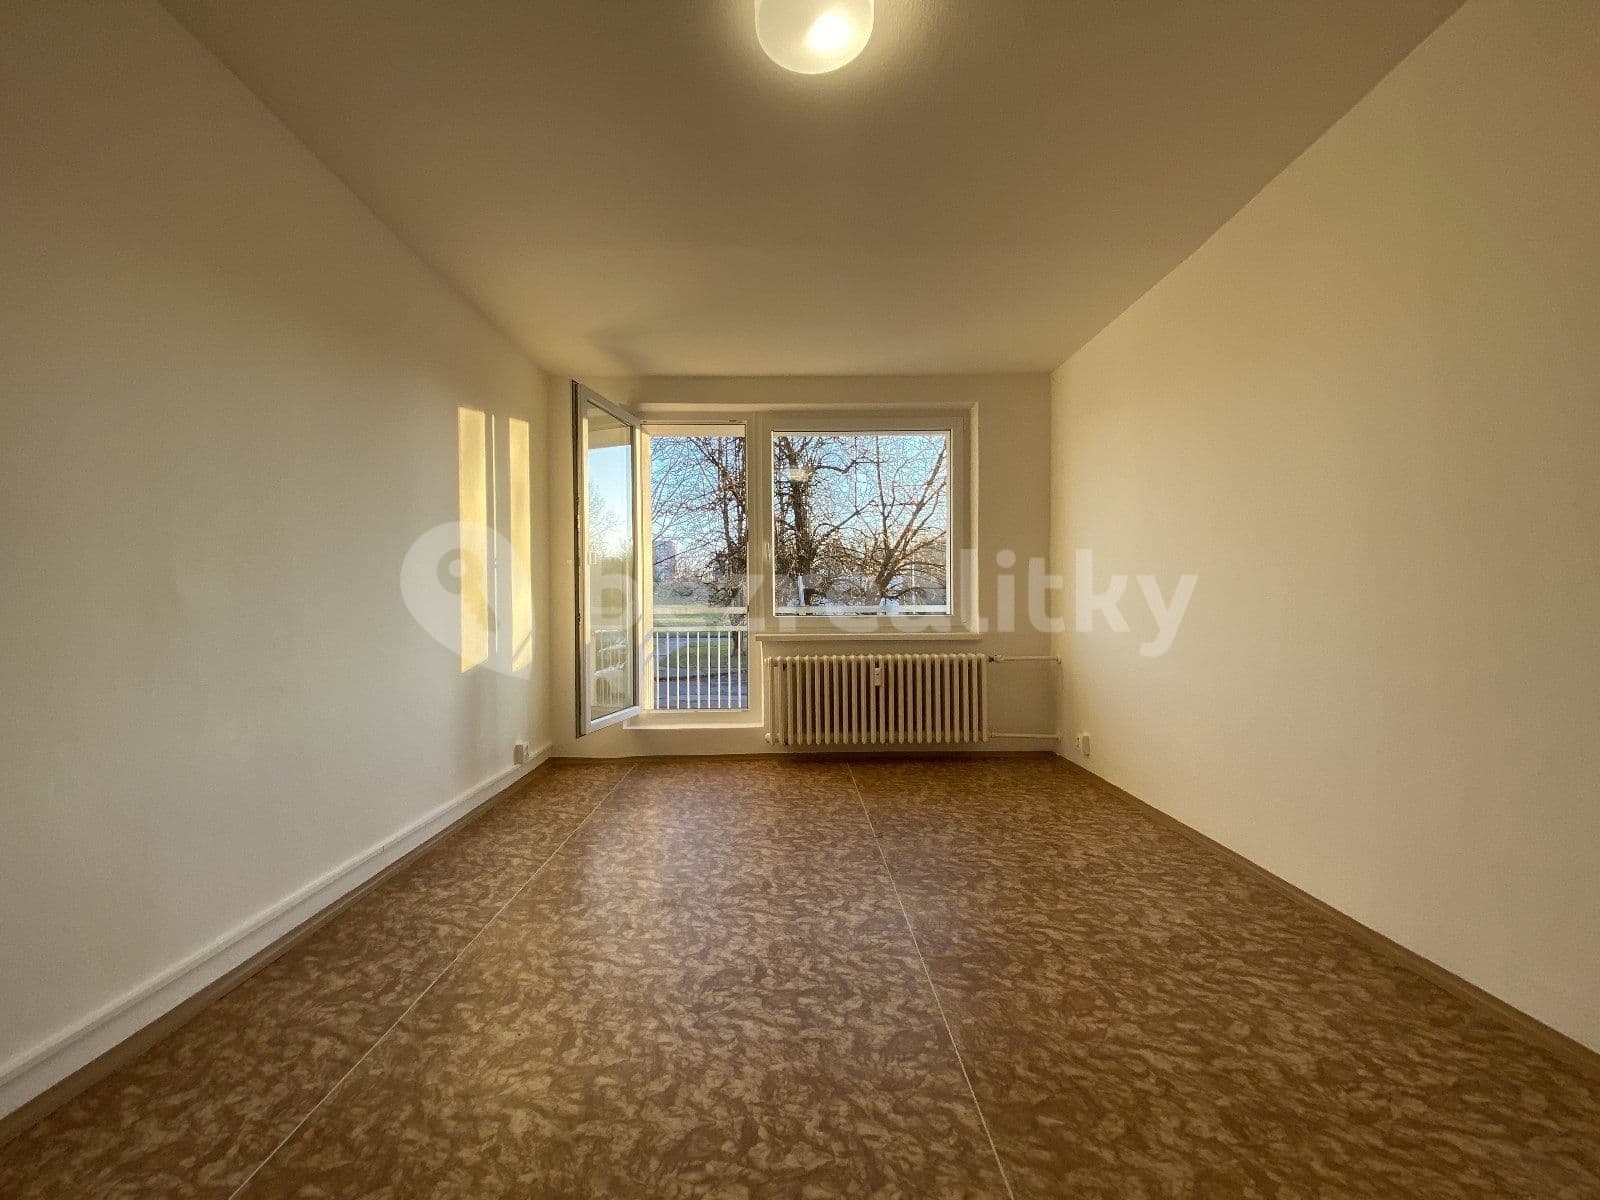 2 bedroom flat to rent, 58 m², Tylova, Ostrava, Moravskoslezský Region